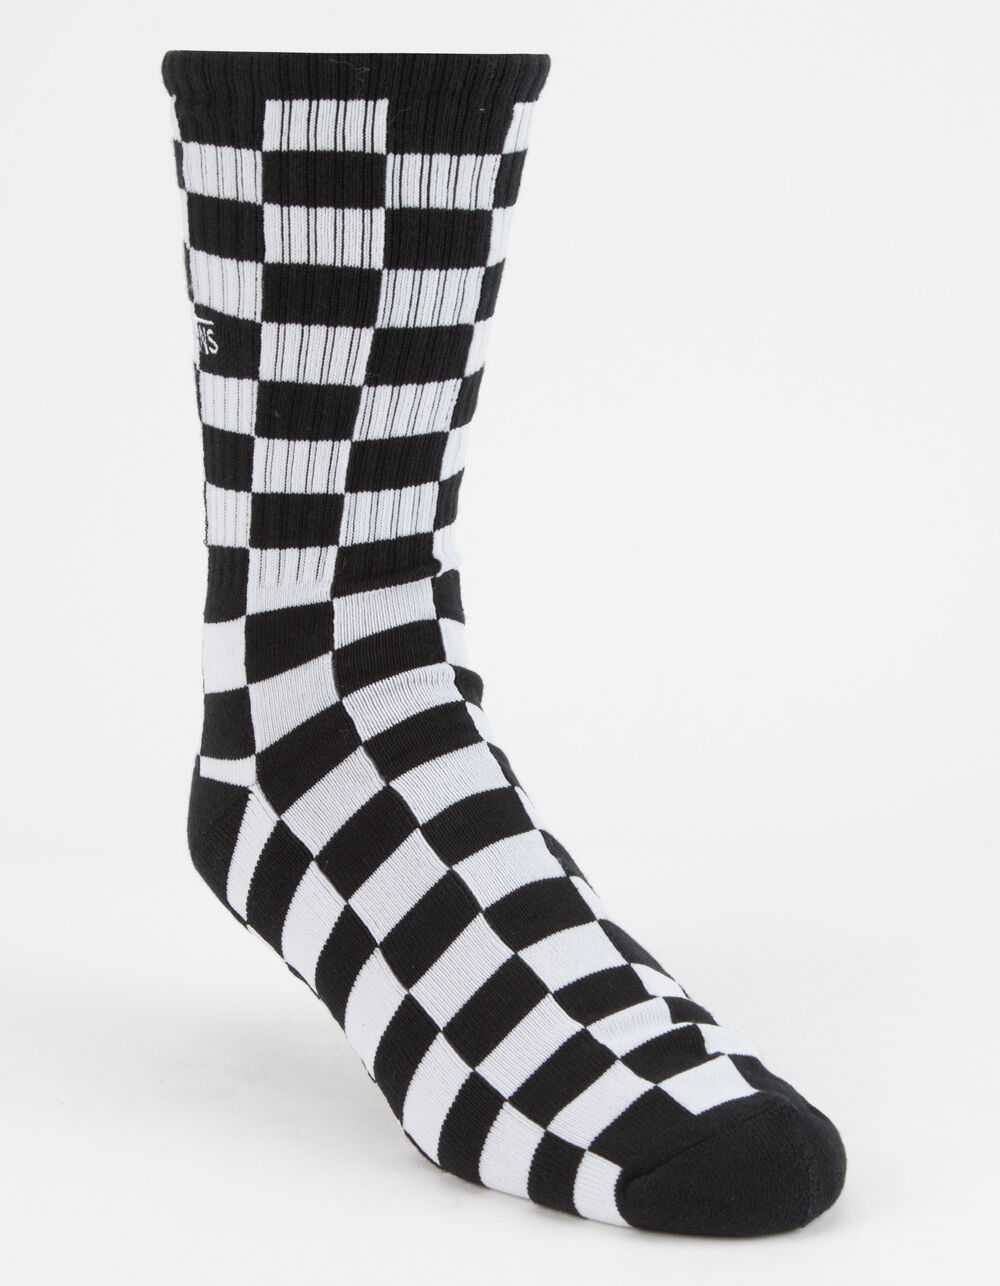 VANS Checkerboard II Mens Crew Socks - BLACK/WHITE | Tillys